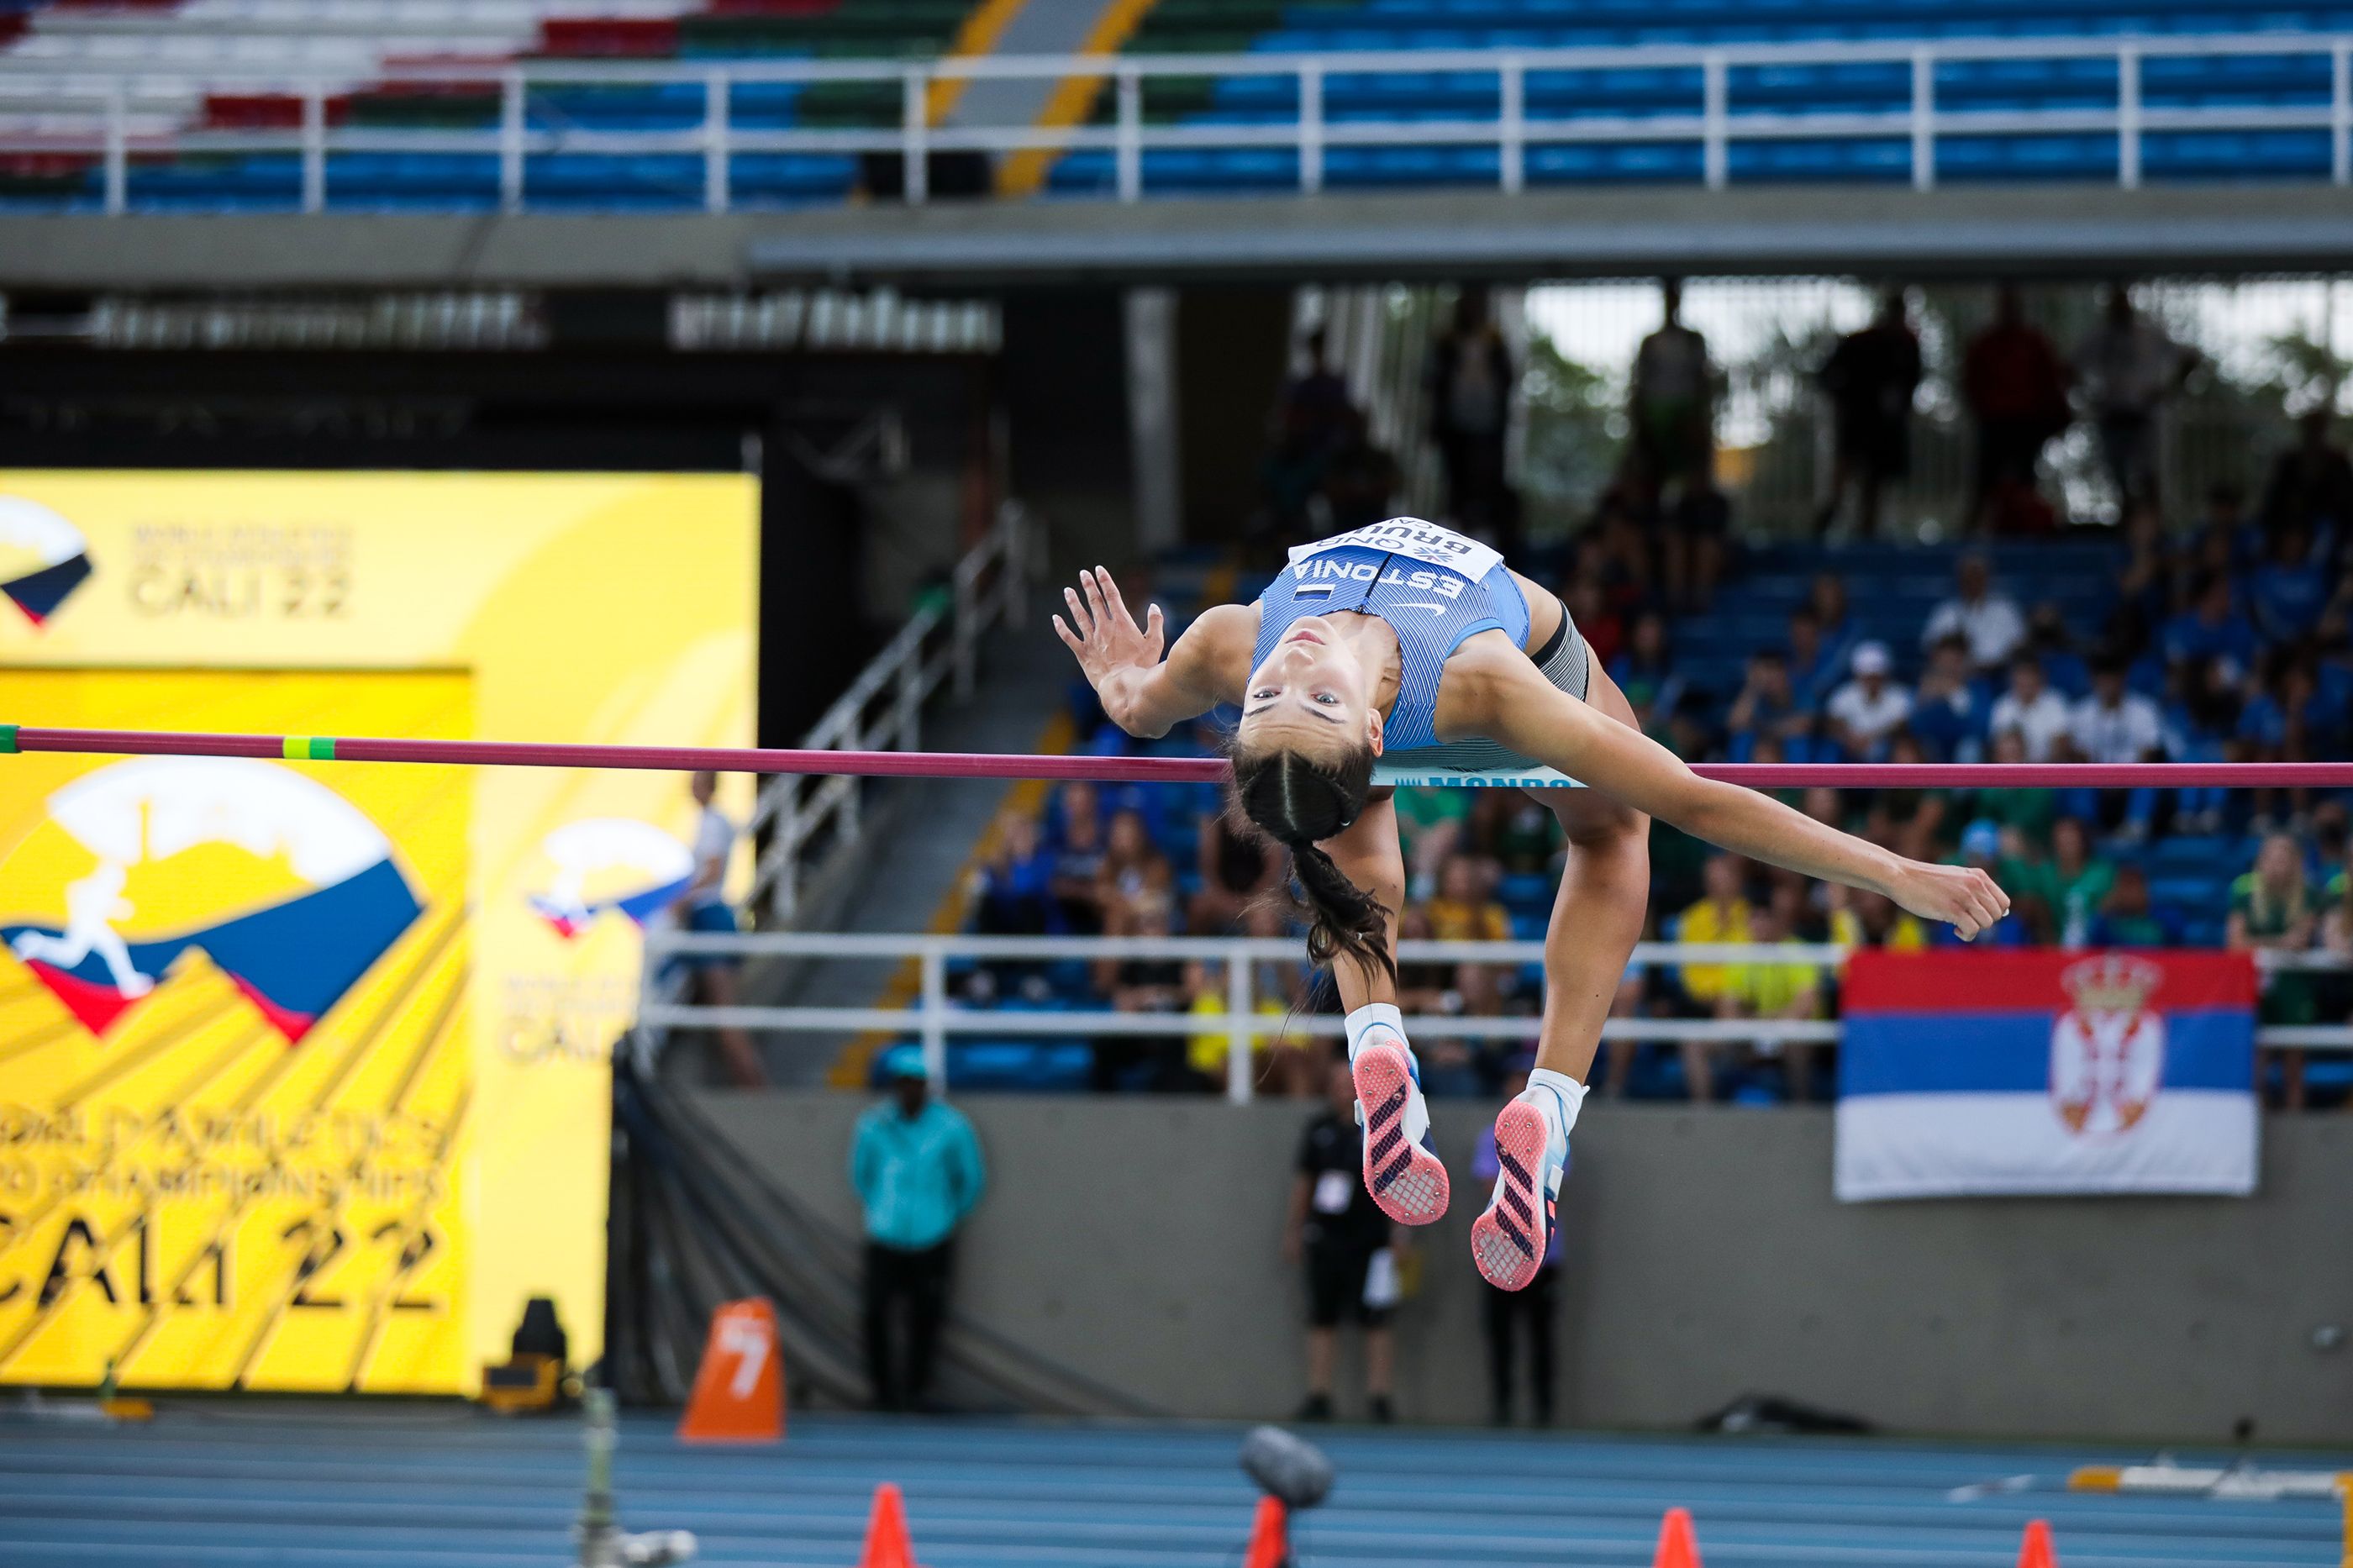 High jump winner Karmen Bruus of Estonia at the World Athletics U20 Championships Cali 22